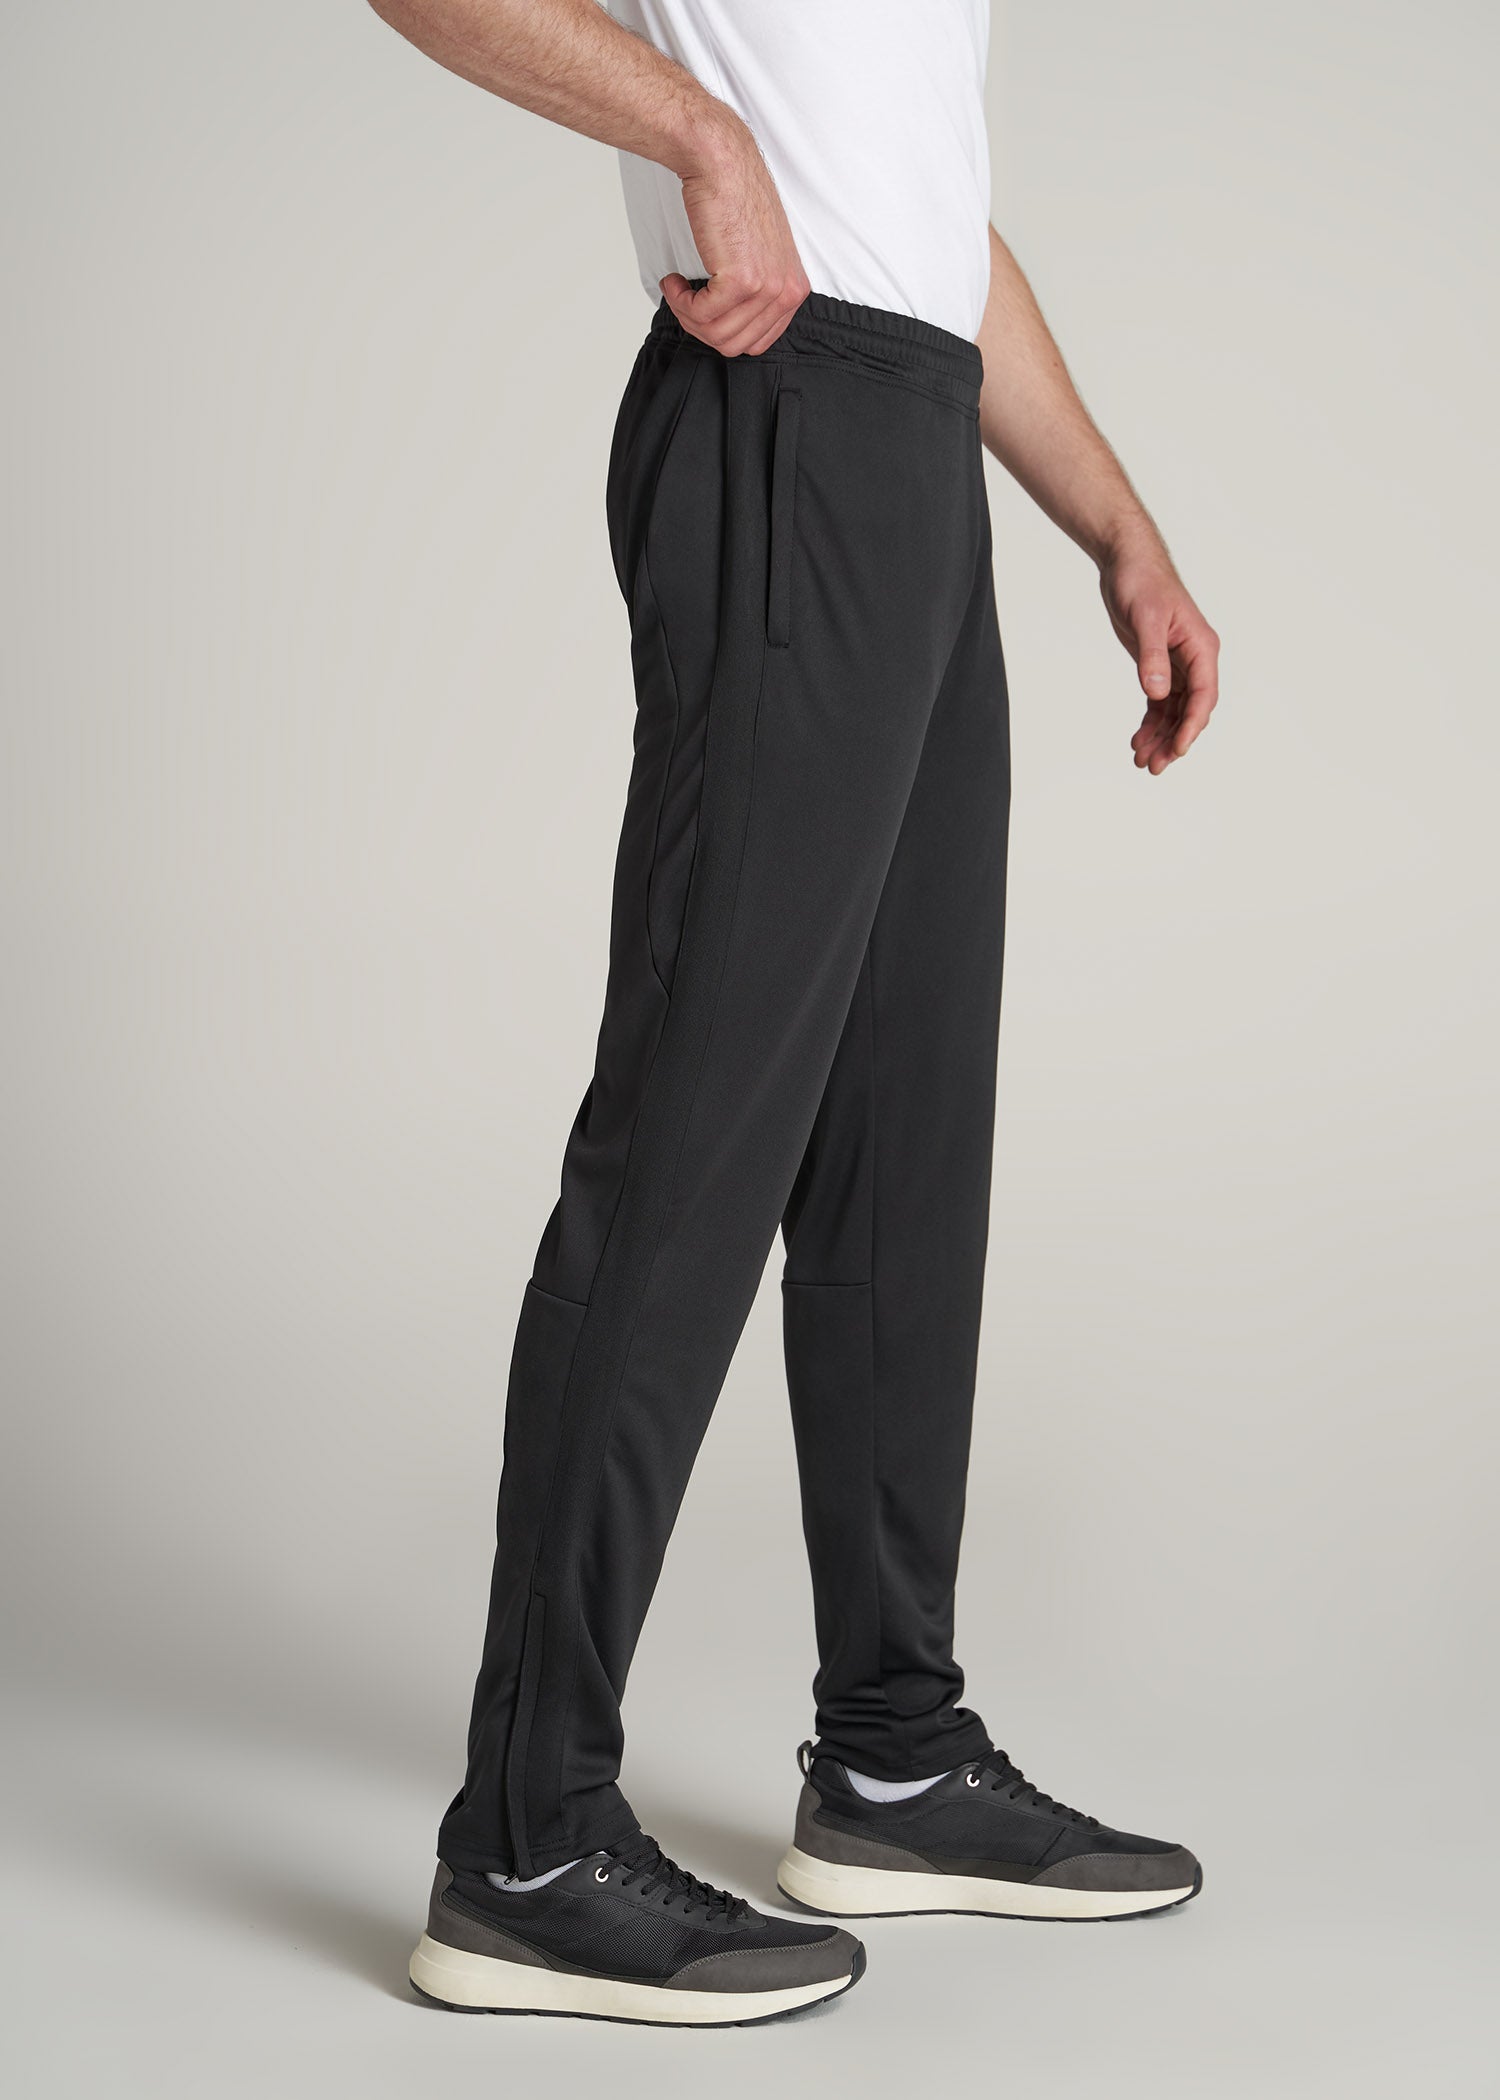       American-Tall-Men-Athletic-Stripe-Pants-Black-Black-side